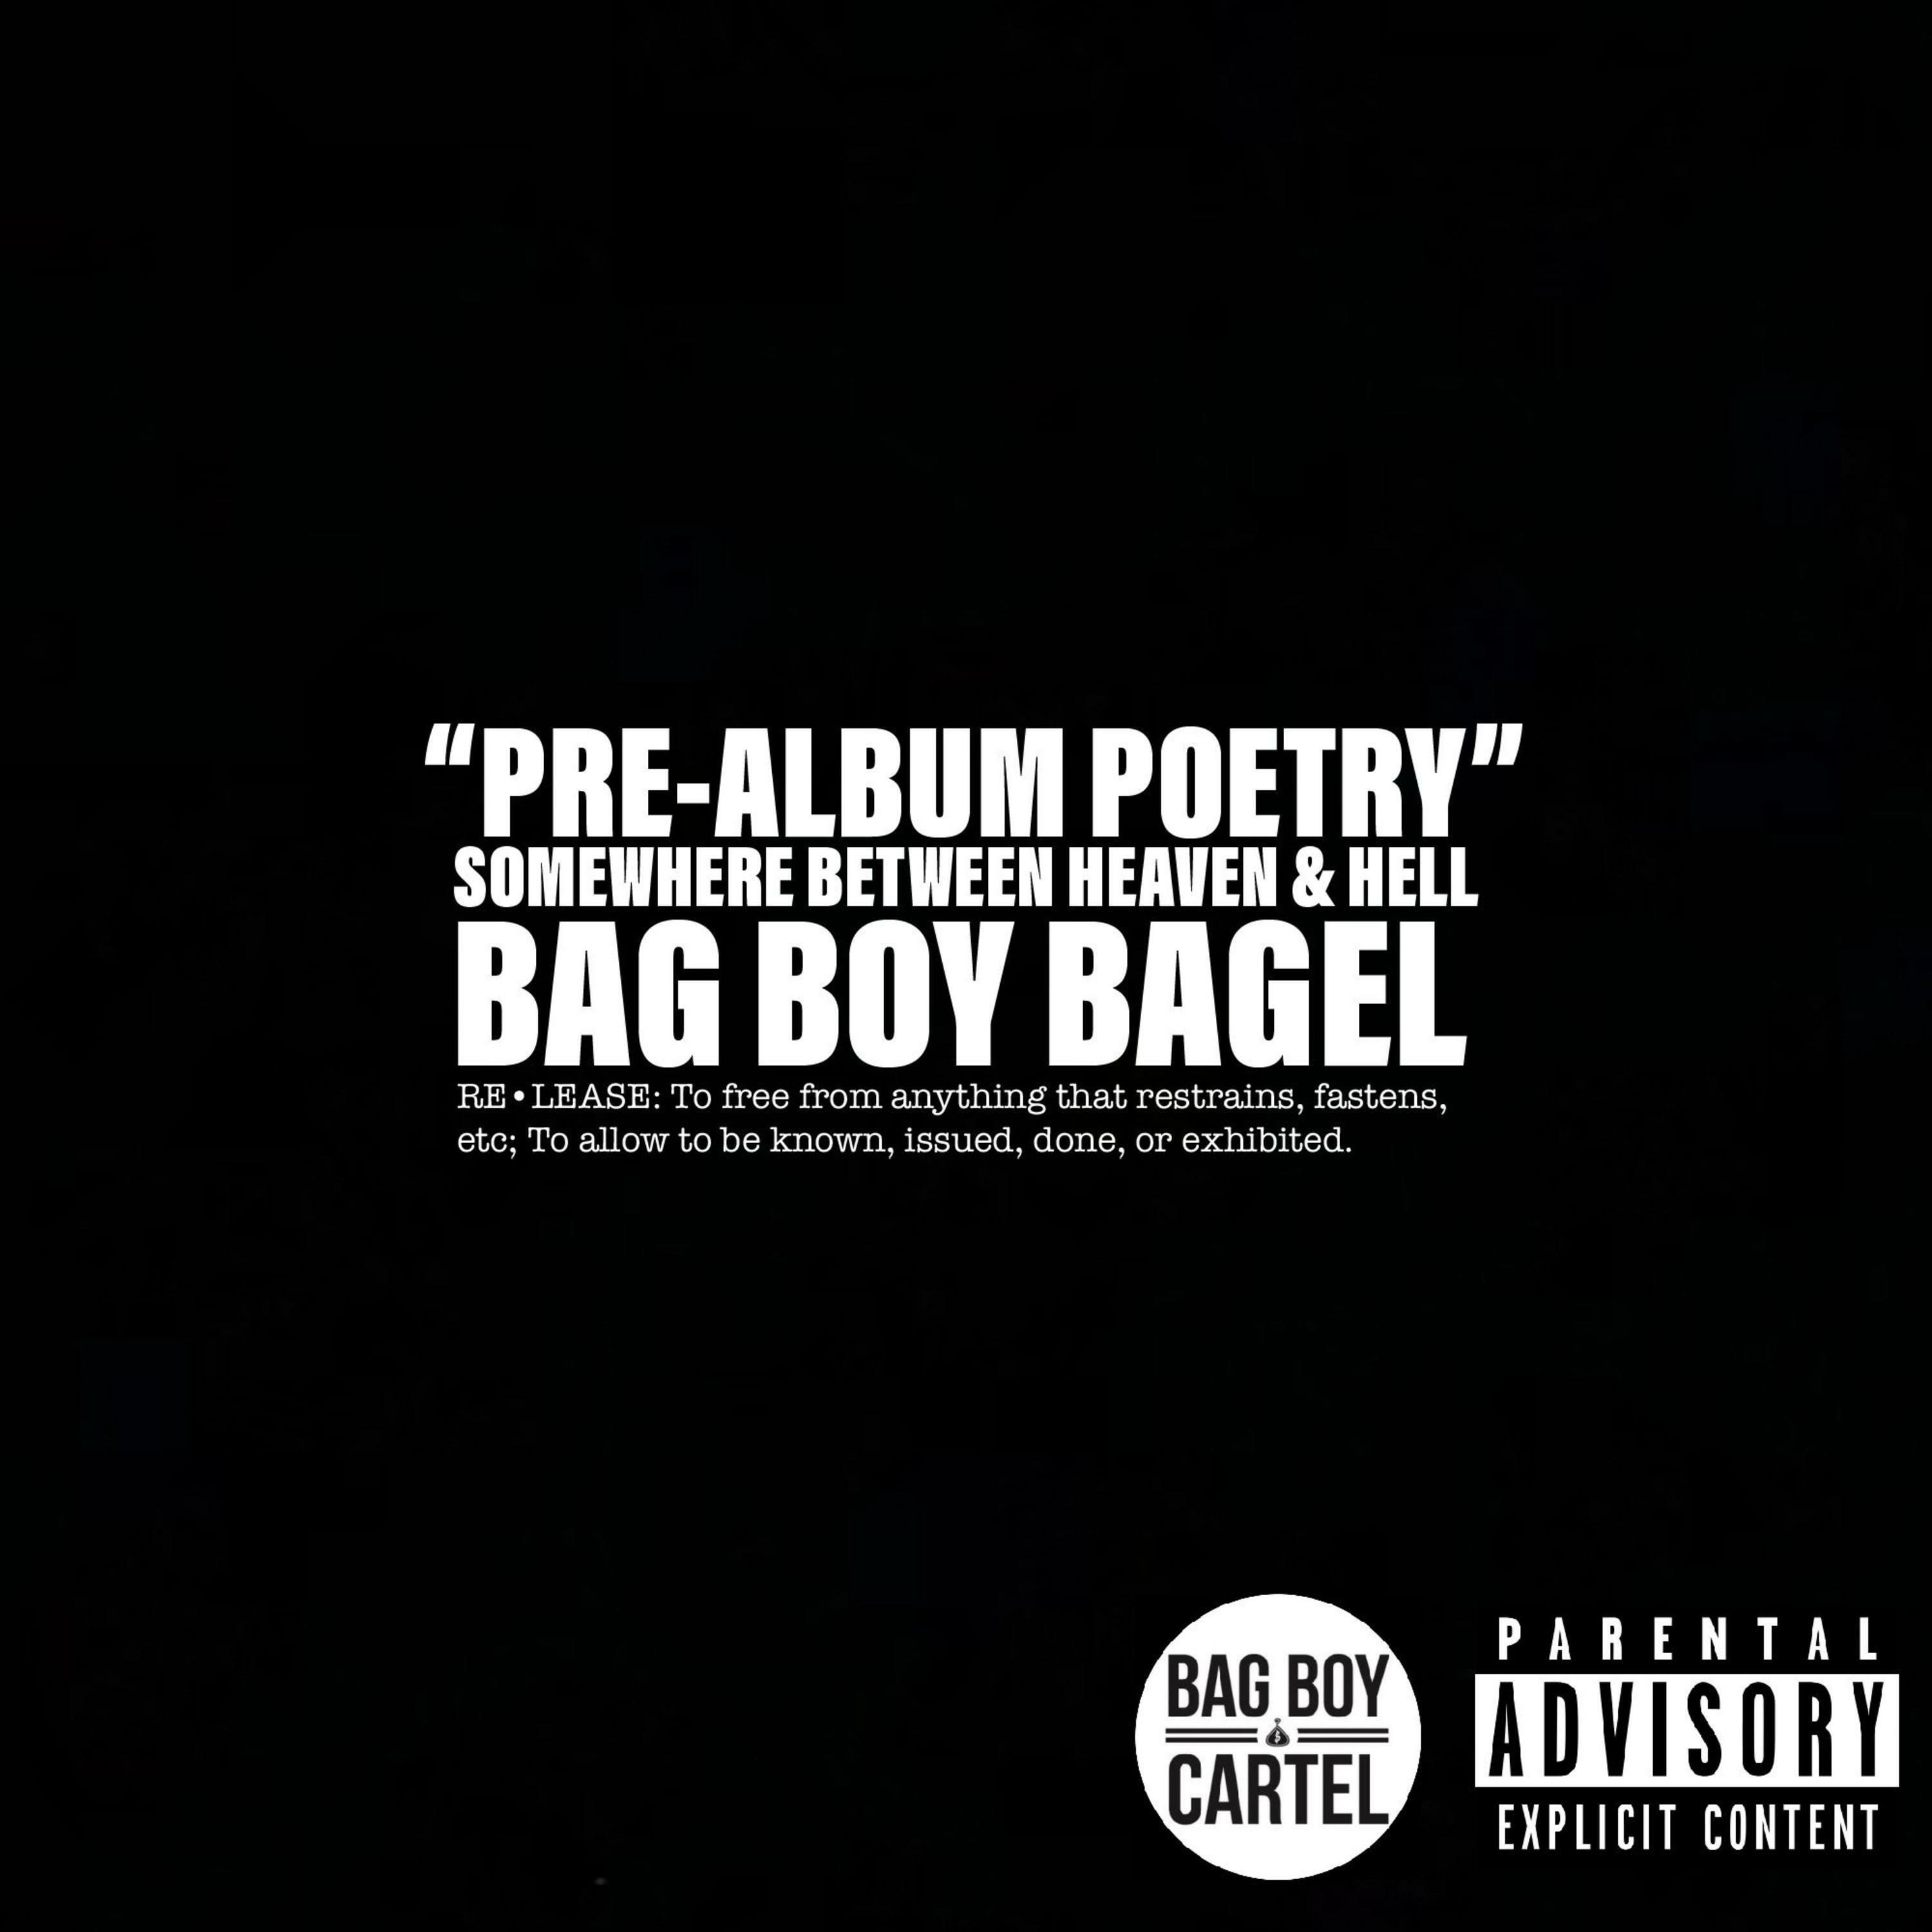 Stream Music from Artists Like Bag Boy Bagel | iHeart